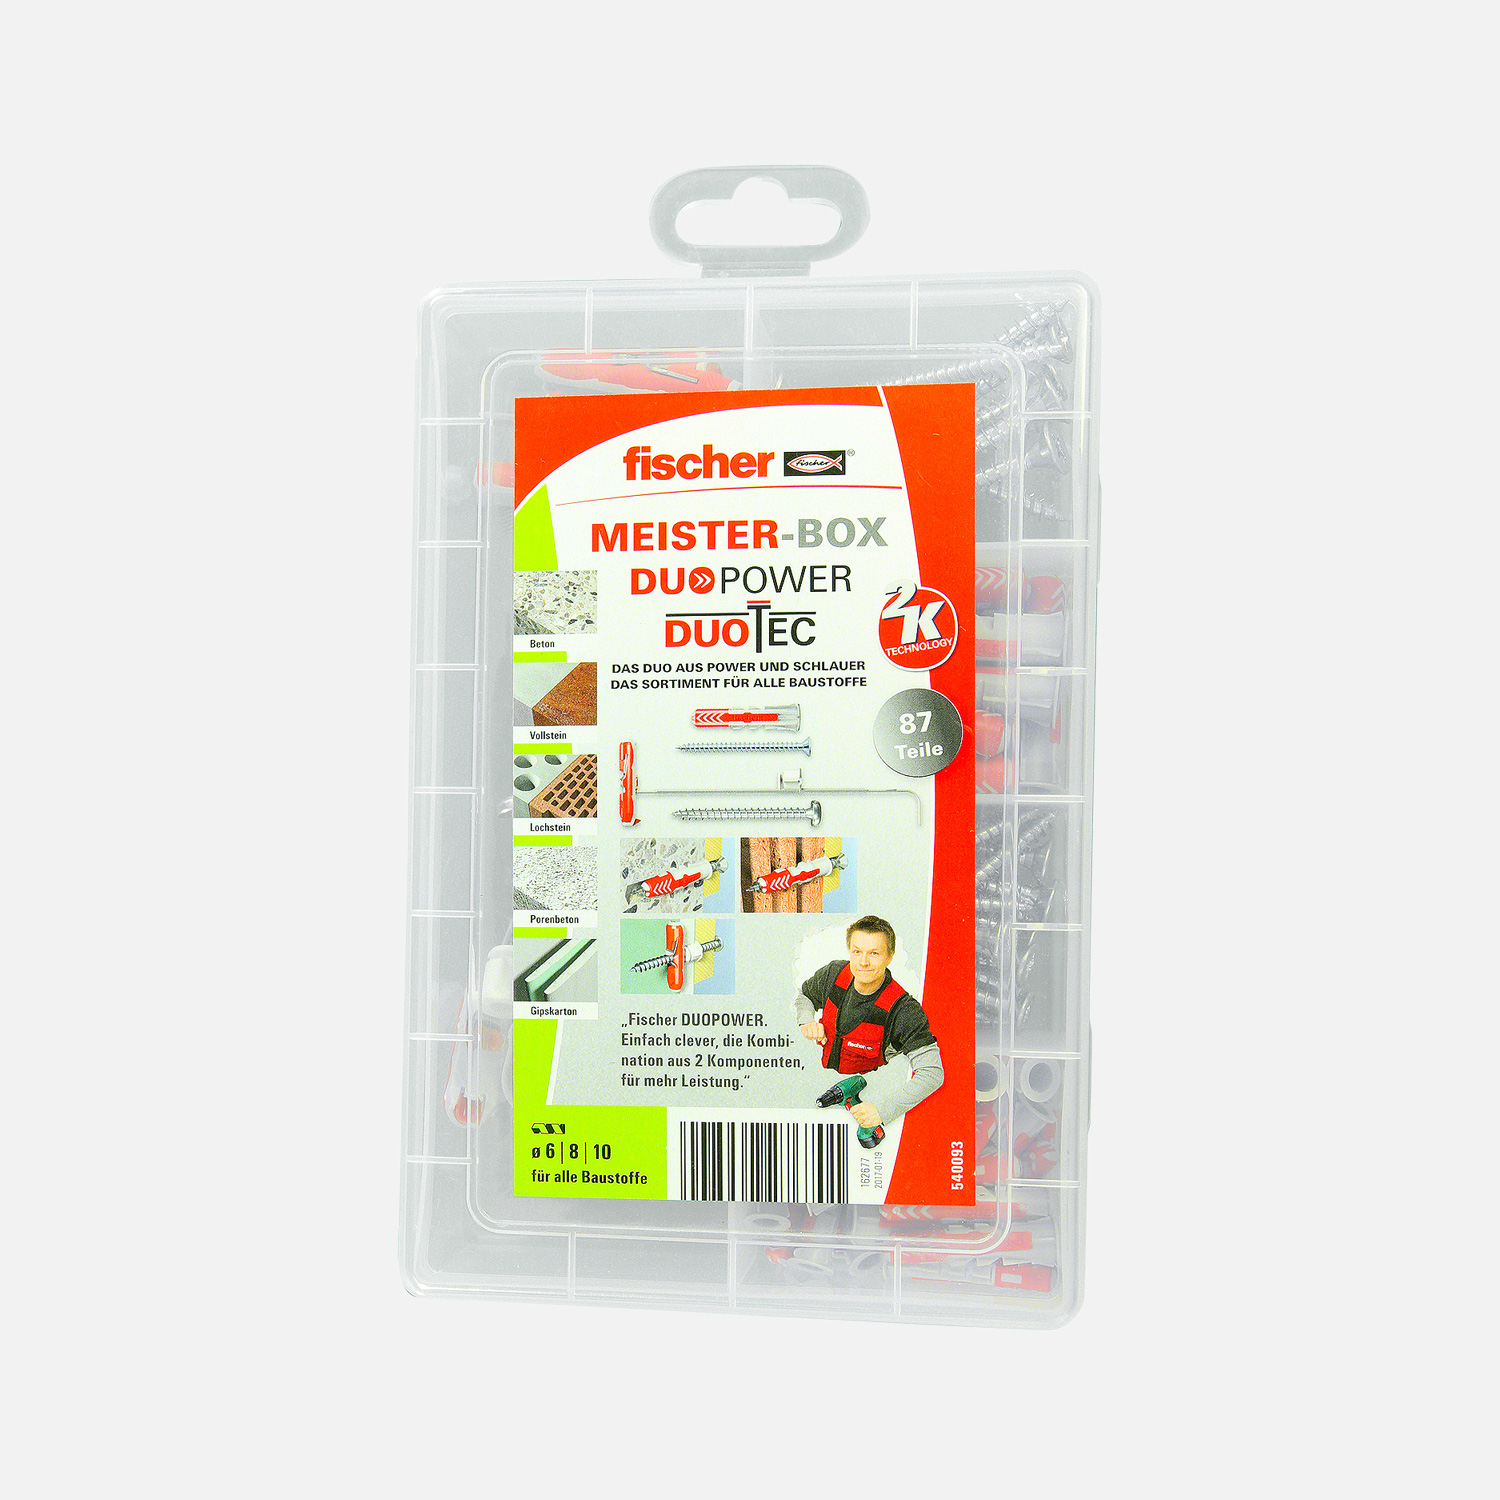 87 tlg. FISCHER Meister-Box DUOPOWER-DUOTEC + Schrauben-Sortiment 6/8/10mm